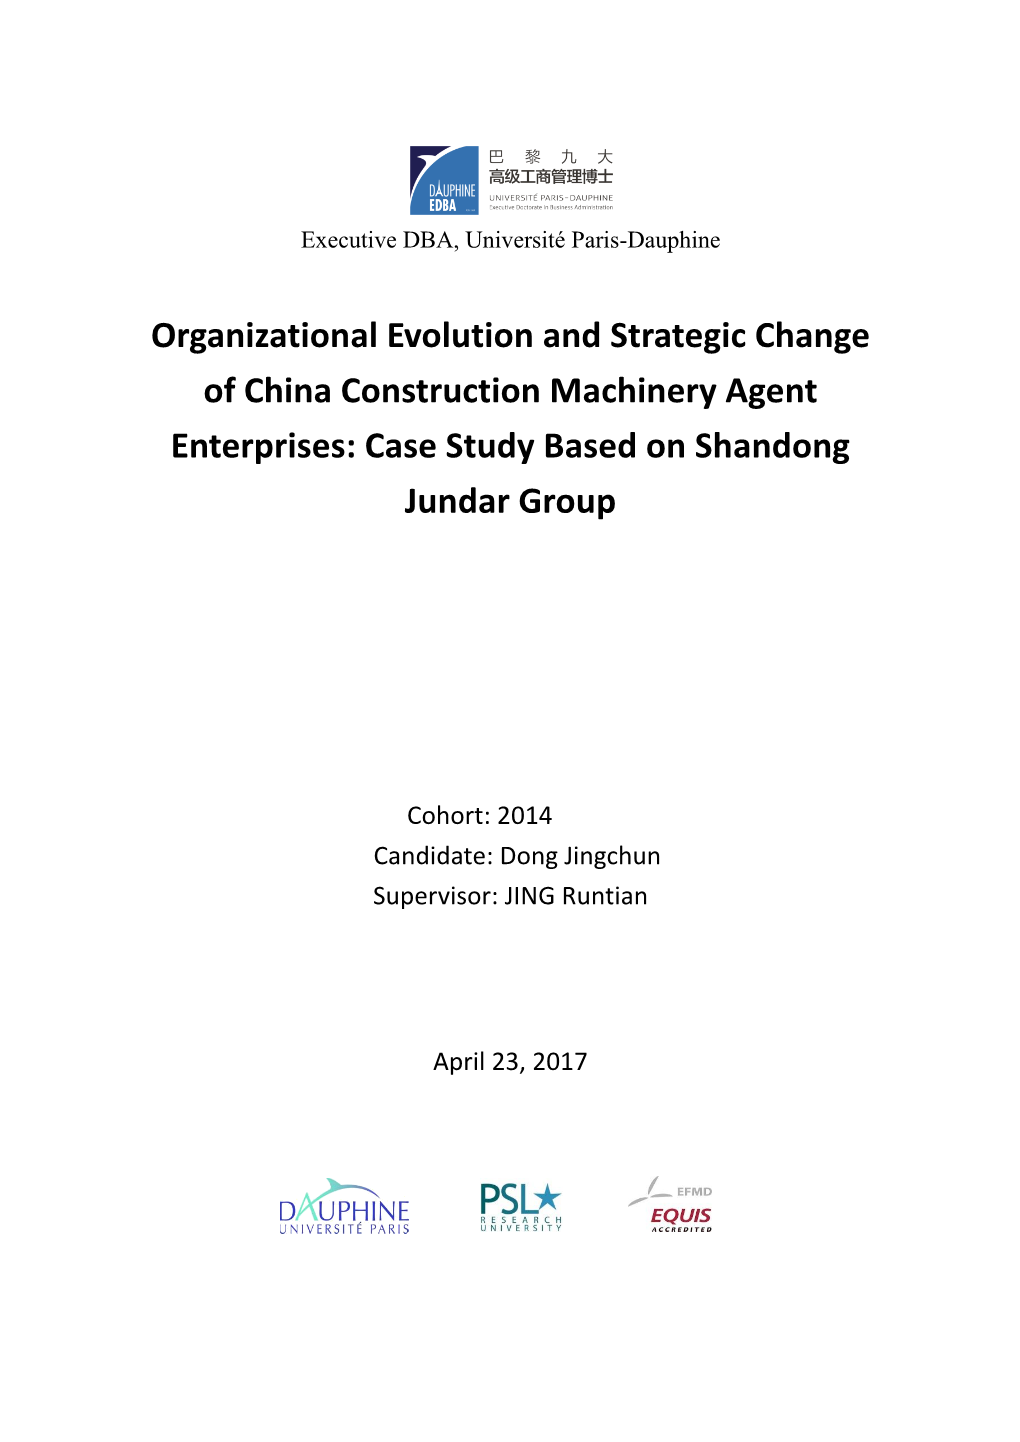 Organizational Evolution and Strategic Change of China Construction Machinery Agent Enterprises: Case Study Based on Shandong Jundar Group